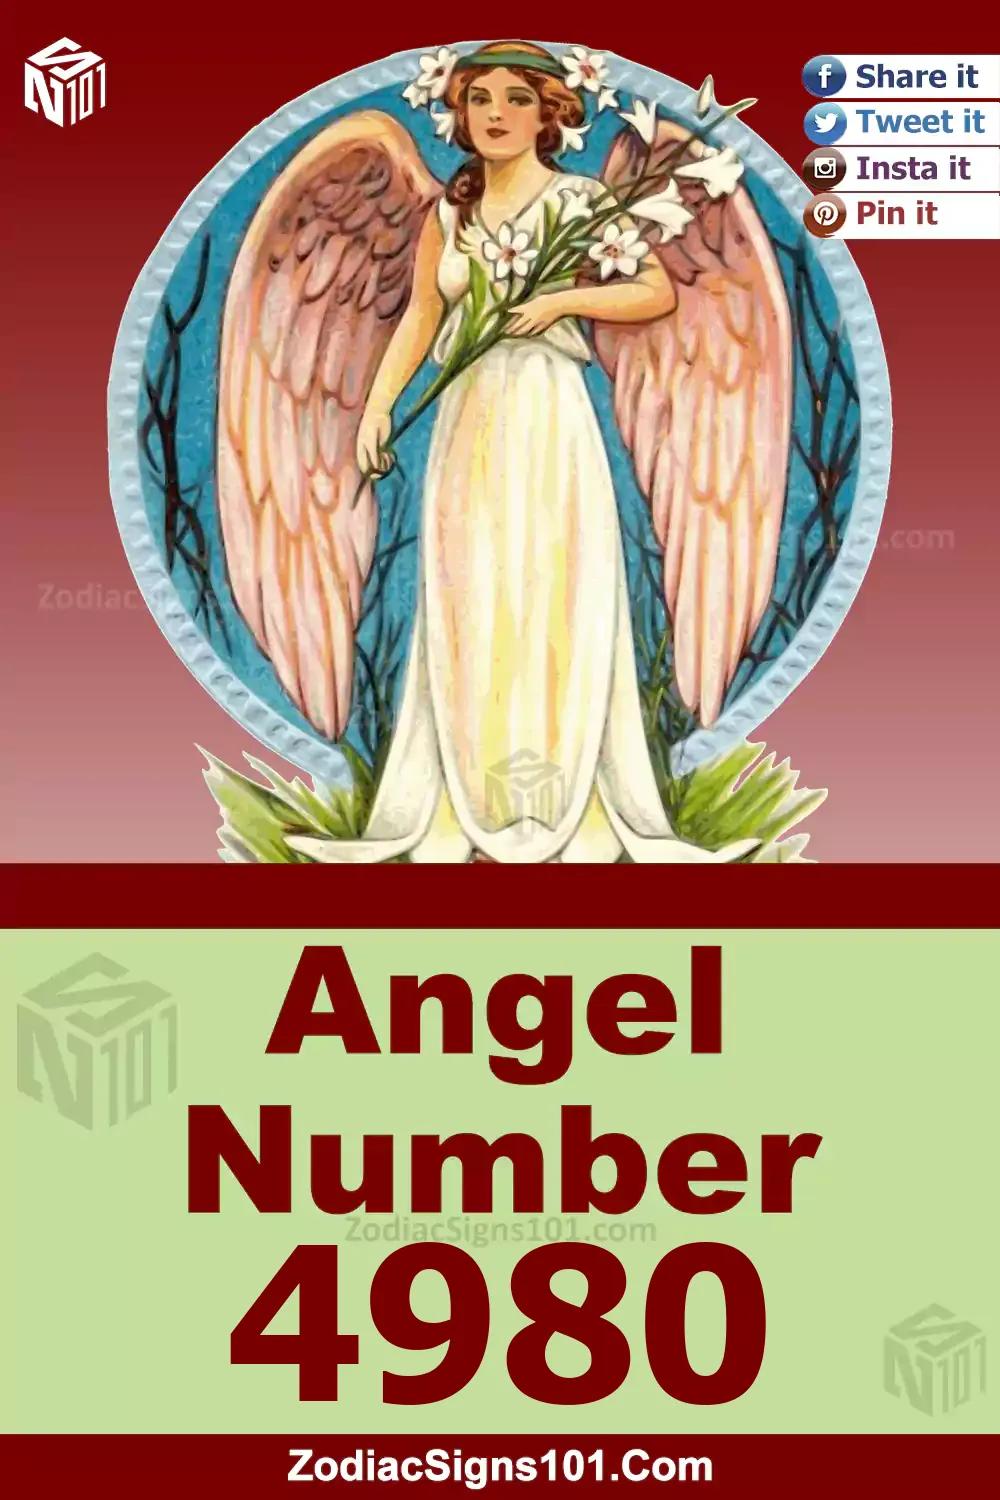 4980-Angel-Number-Meaning.jpg